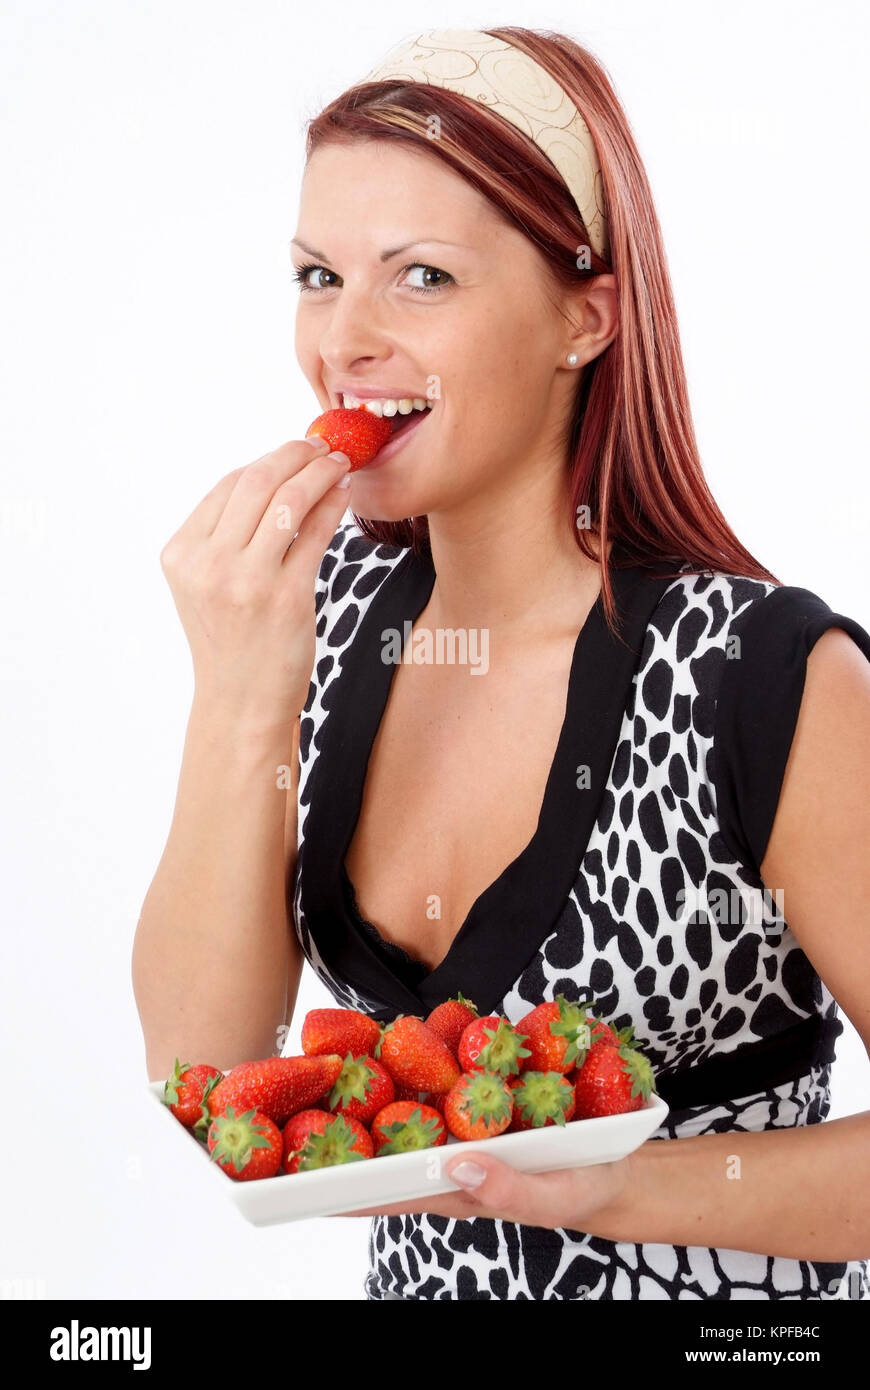 Junge Frau Isst Erdbeeren - junge Frau isst Erdbeeren Stockfoto